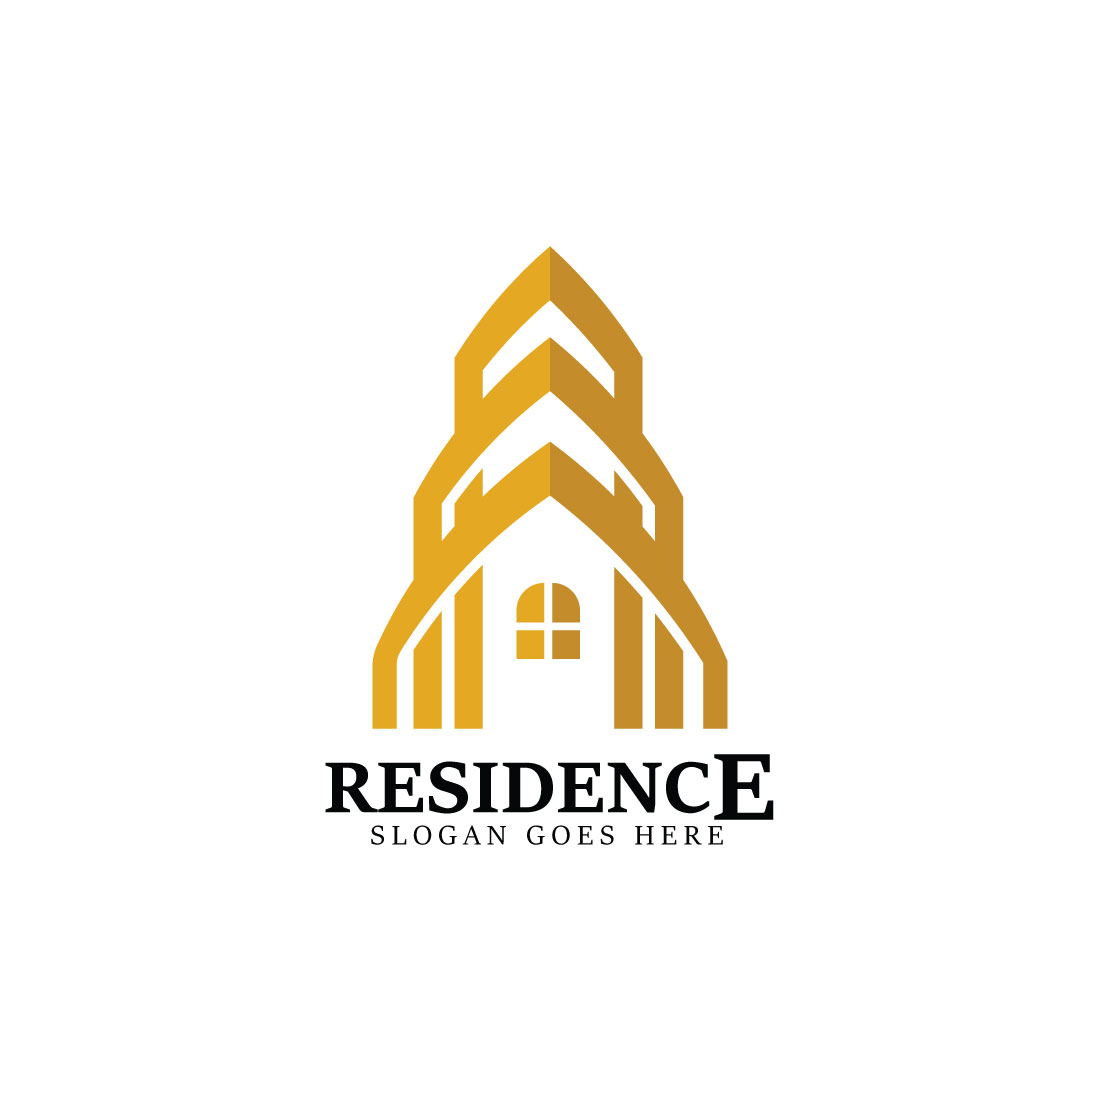 Residence logo design illustration preview image.